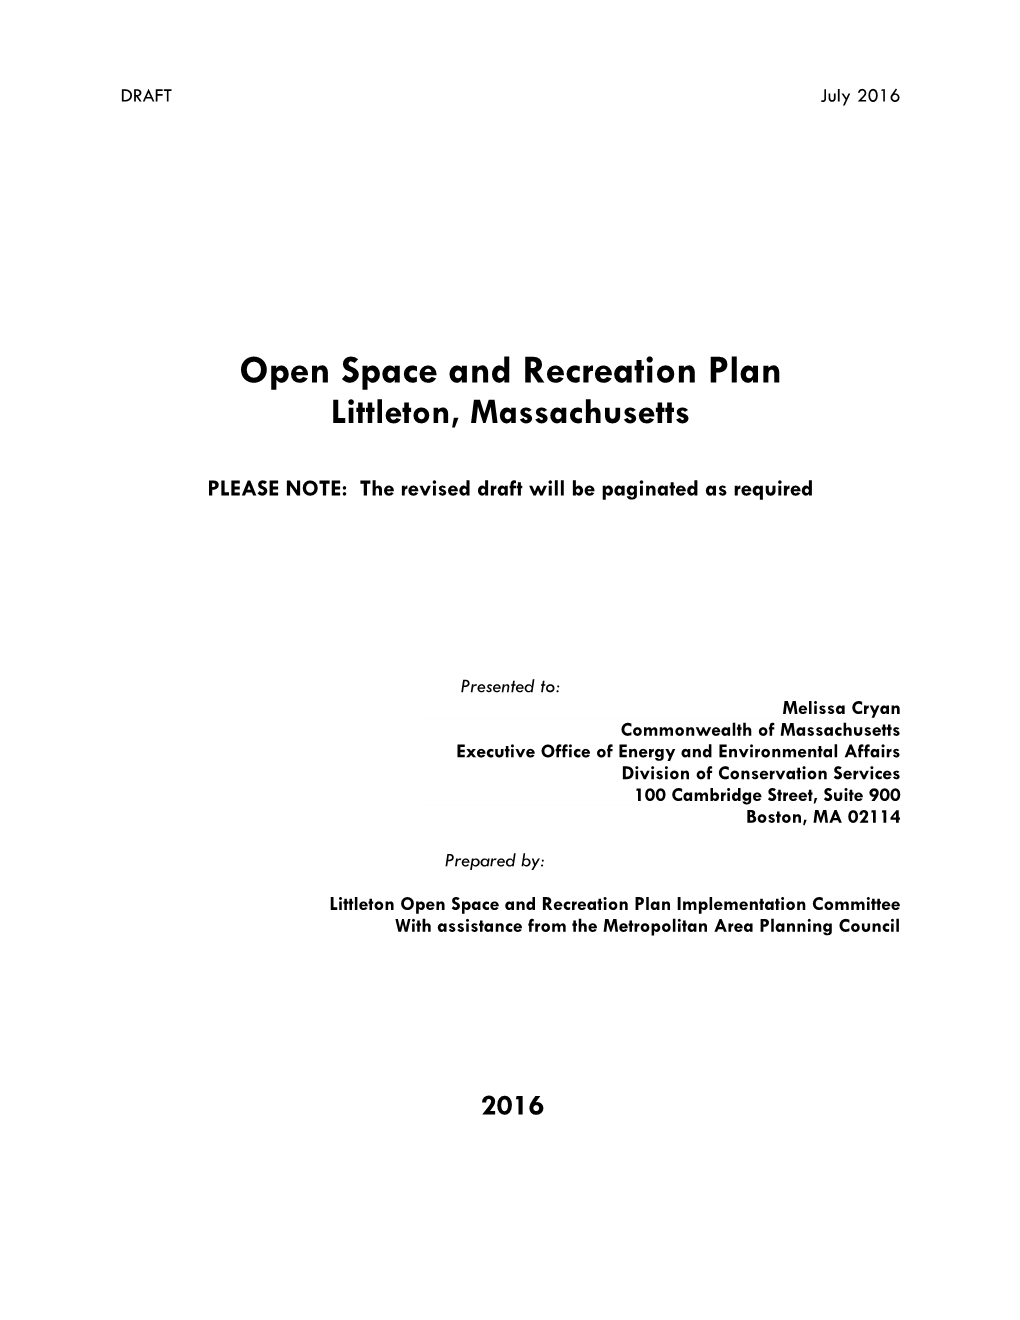 Open Space and Recreation Plan Littleton, Massachusetts